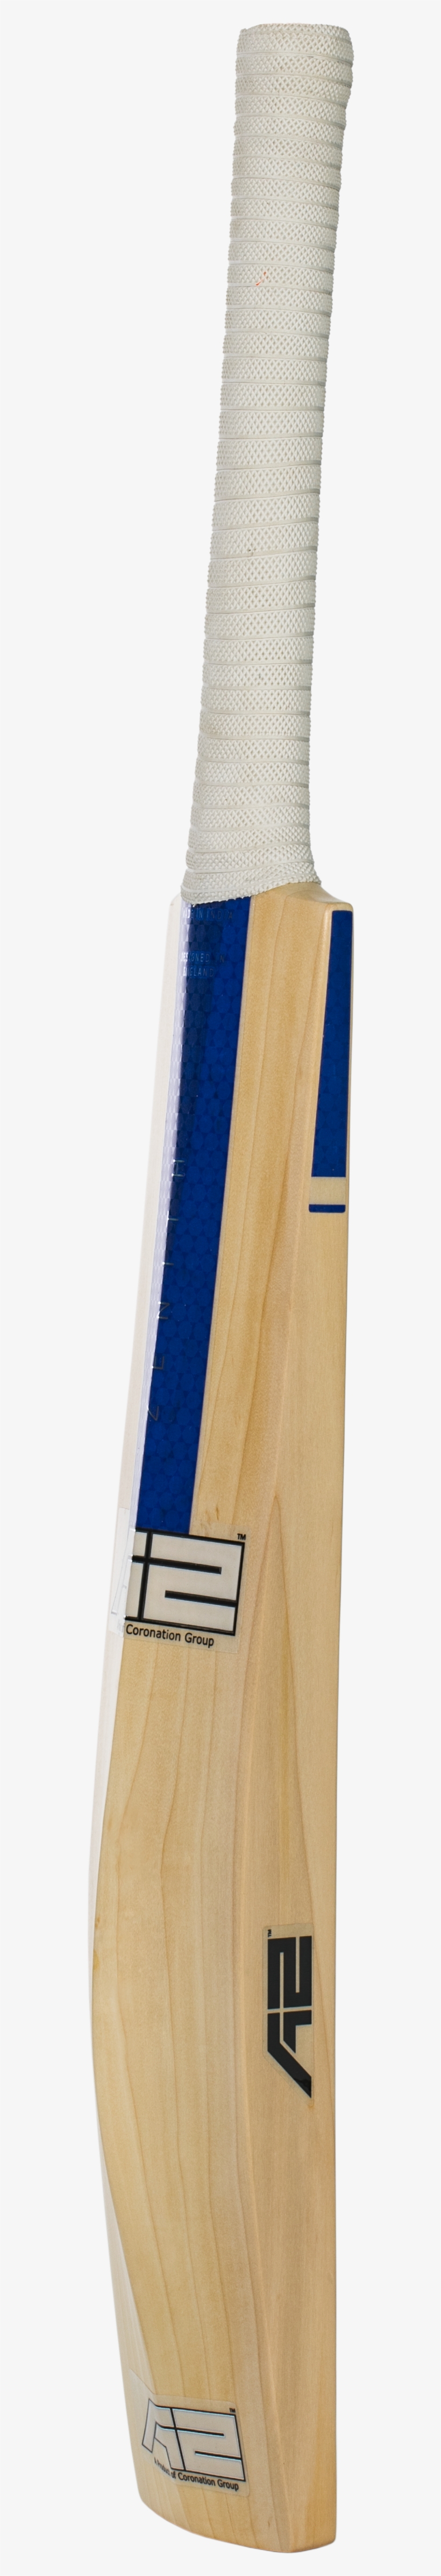 Cricket Bat Ball - English Willow Cricket Bat Manufacturers In India, transparent png #8981146